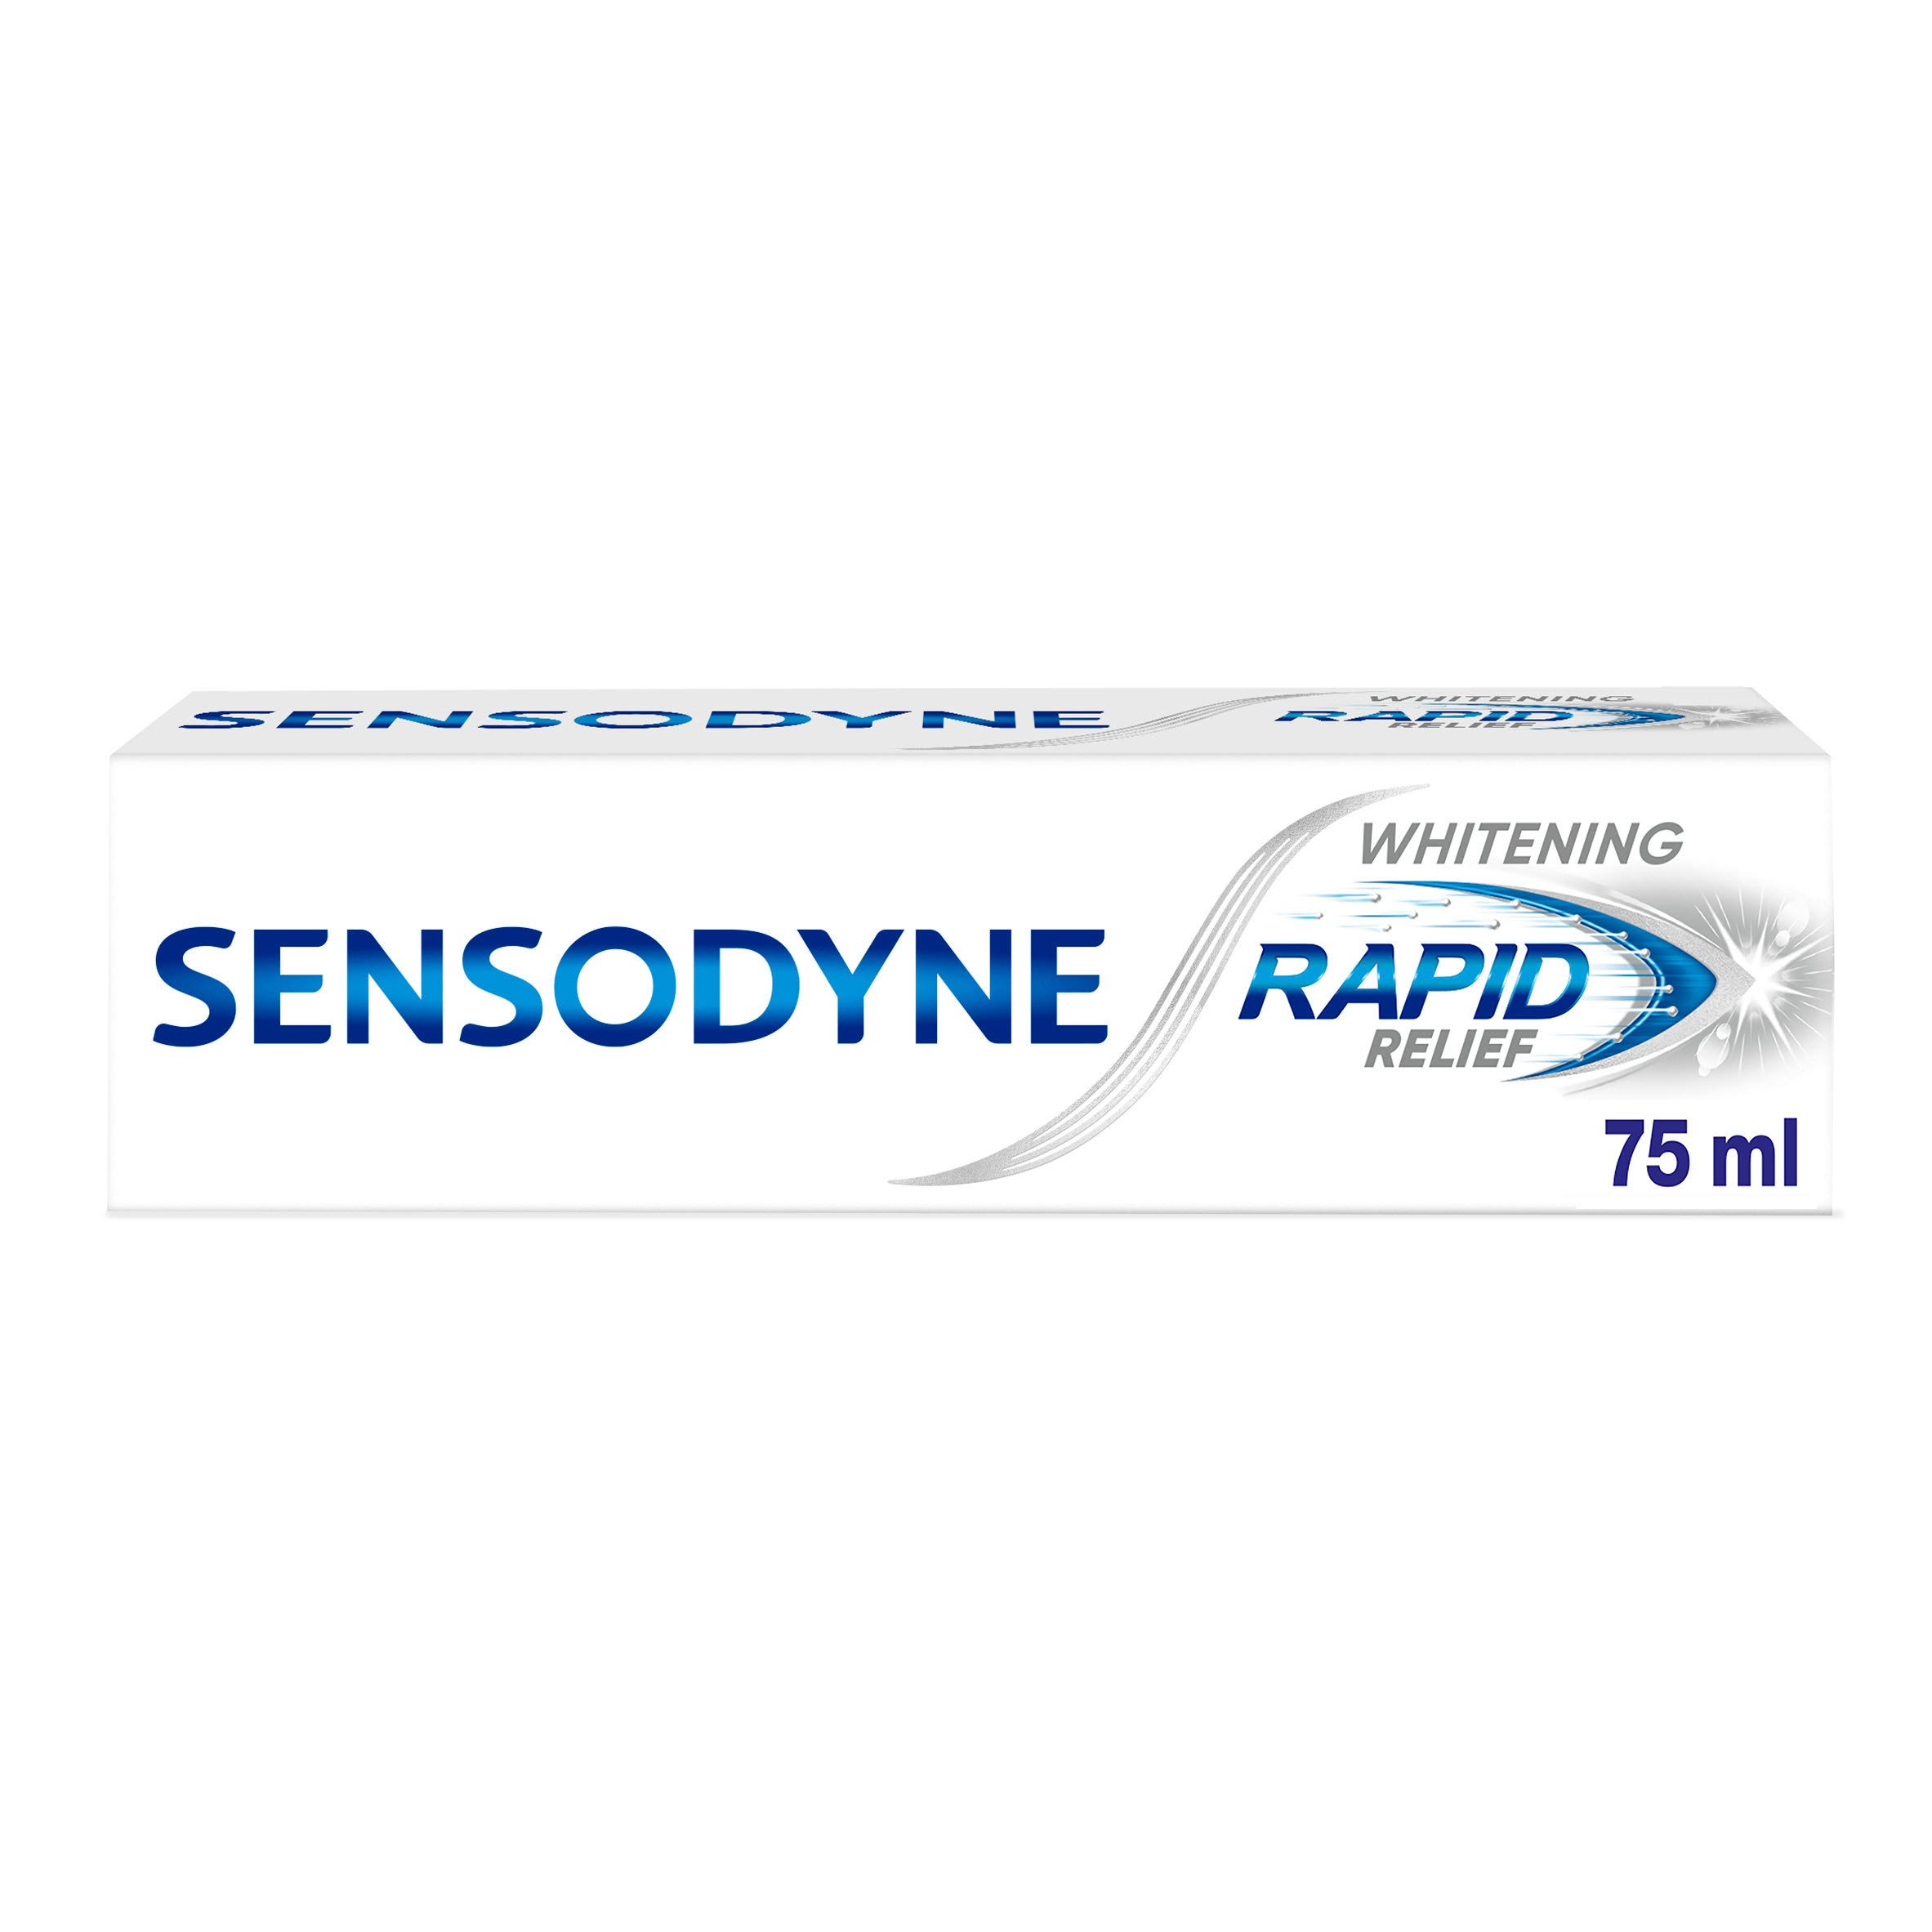 Sensodyne Rapid Relief Whitening - 75ml